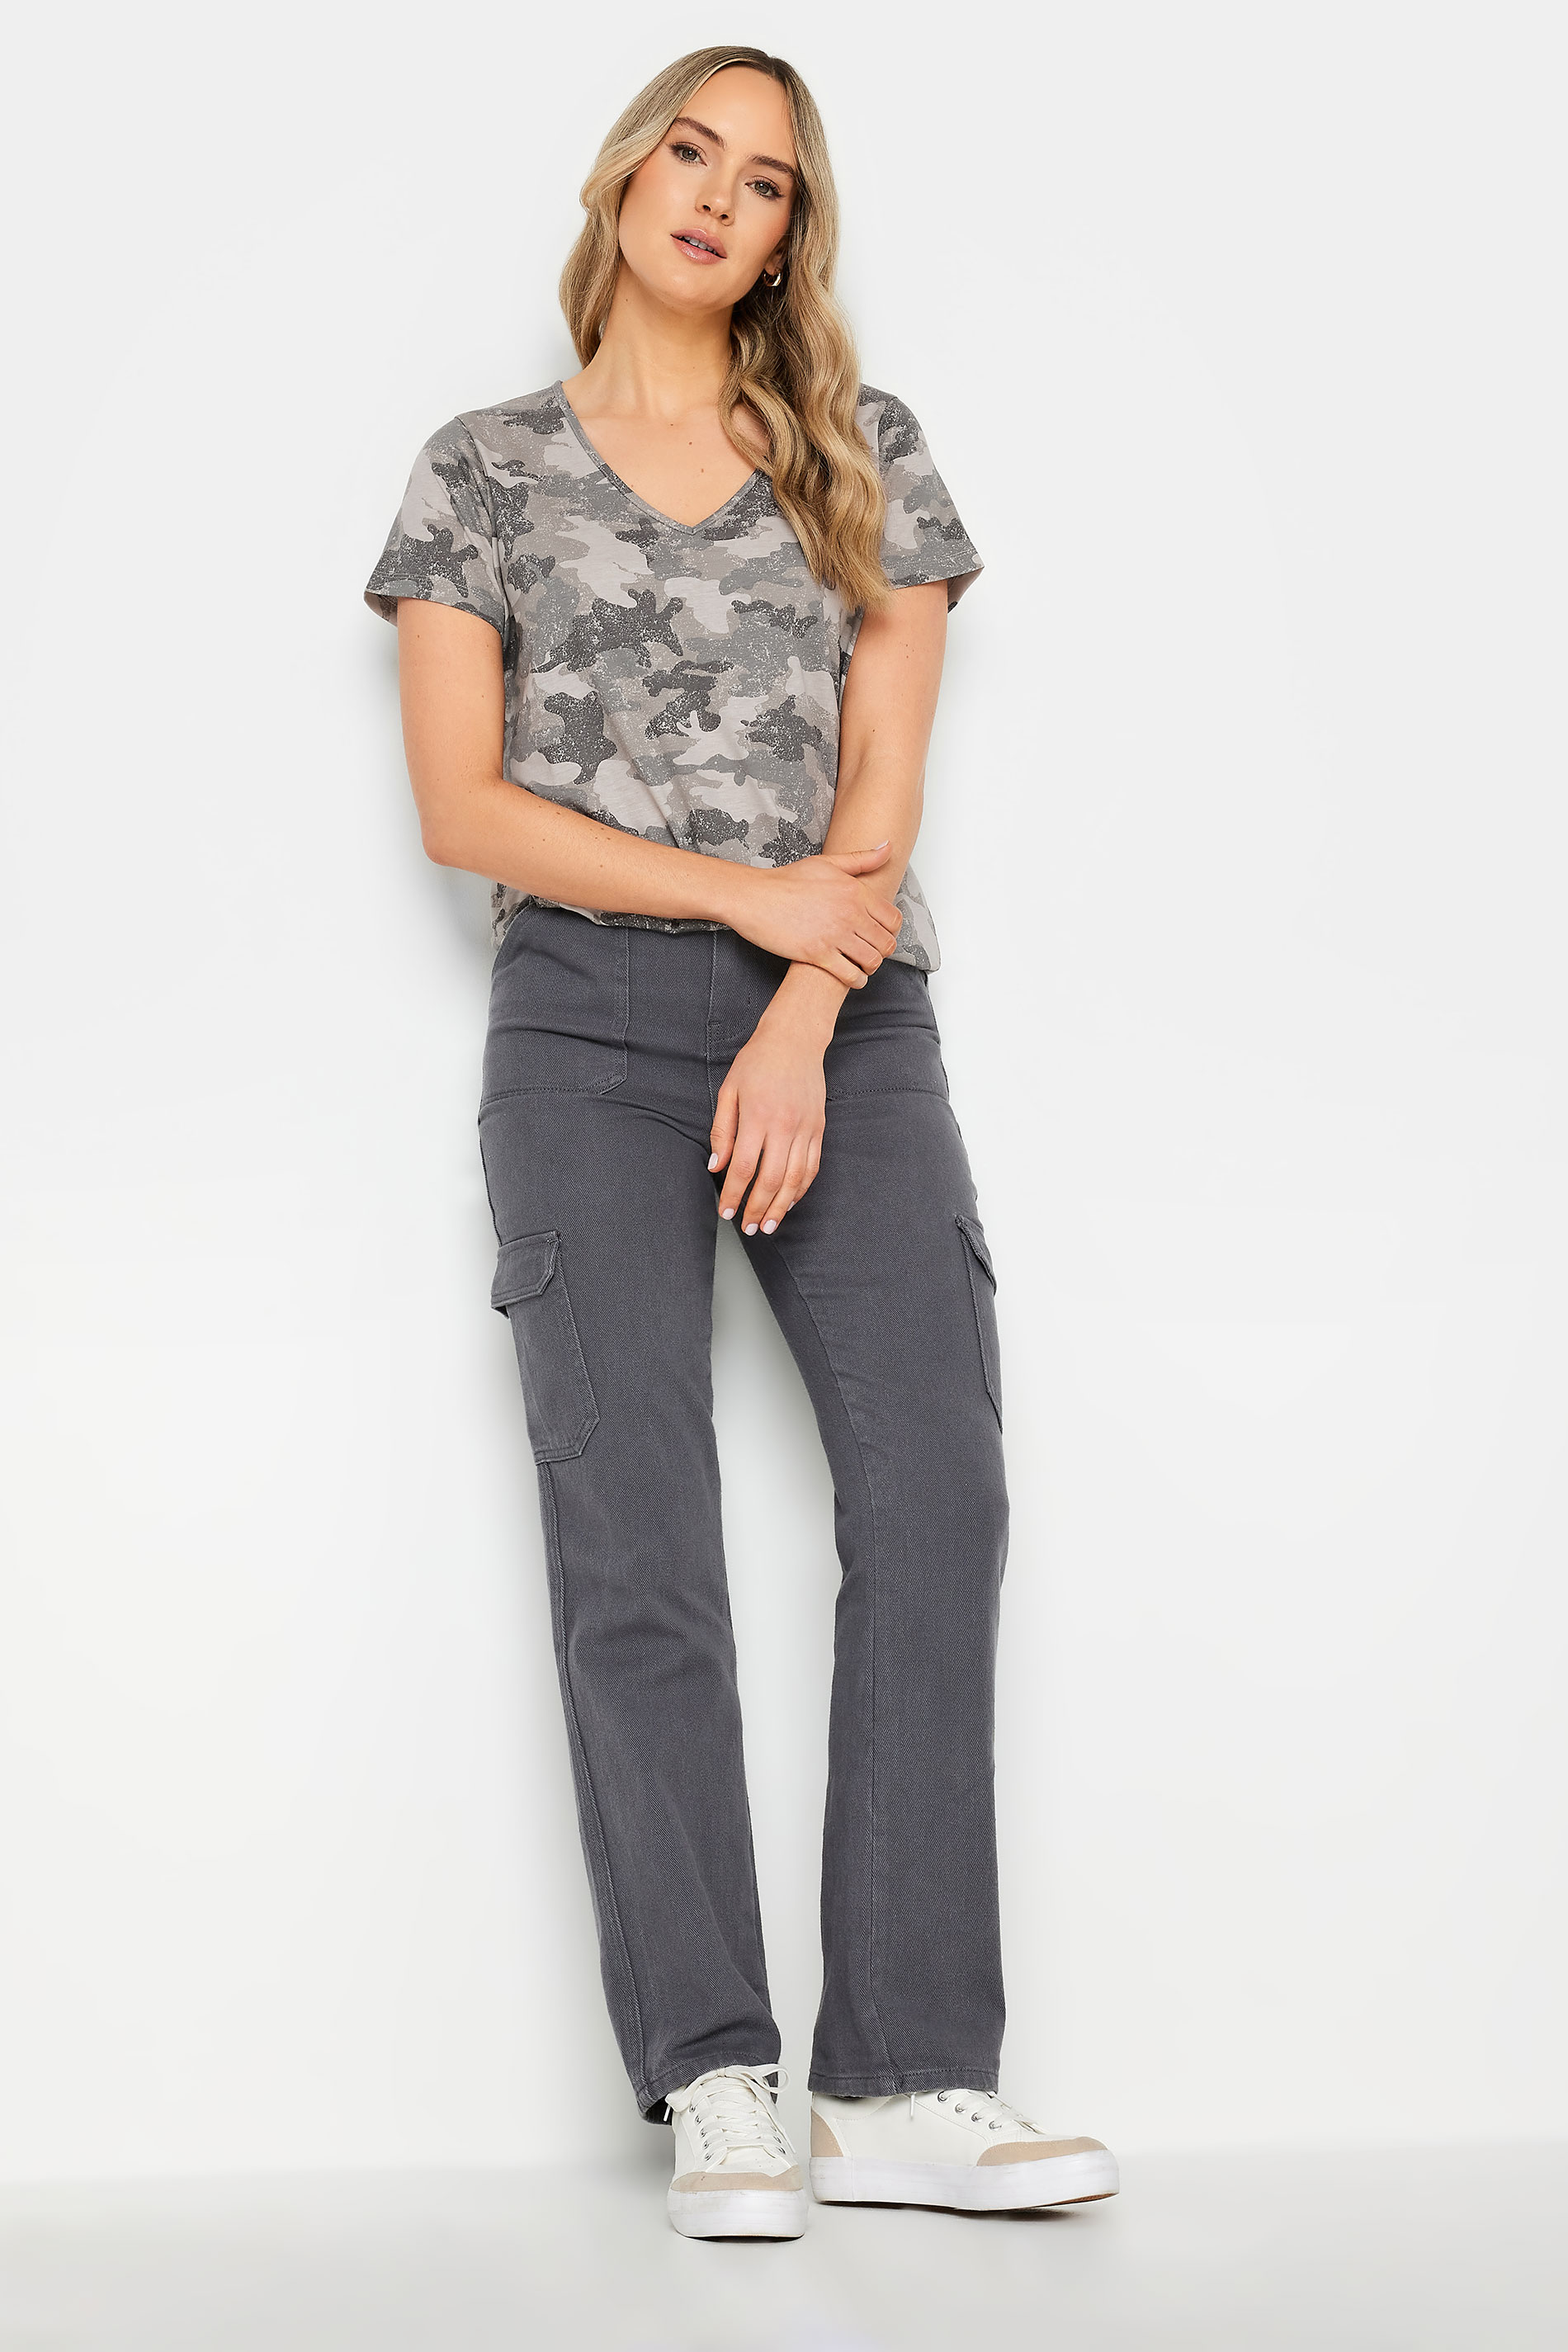 LTS Tall Grey Camo Print T-Shirt | Long Tall Sally  2